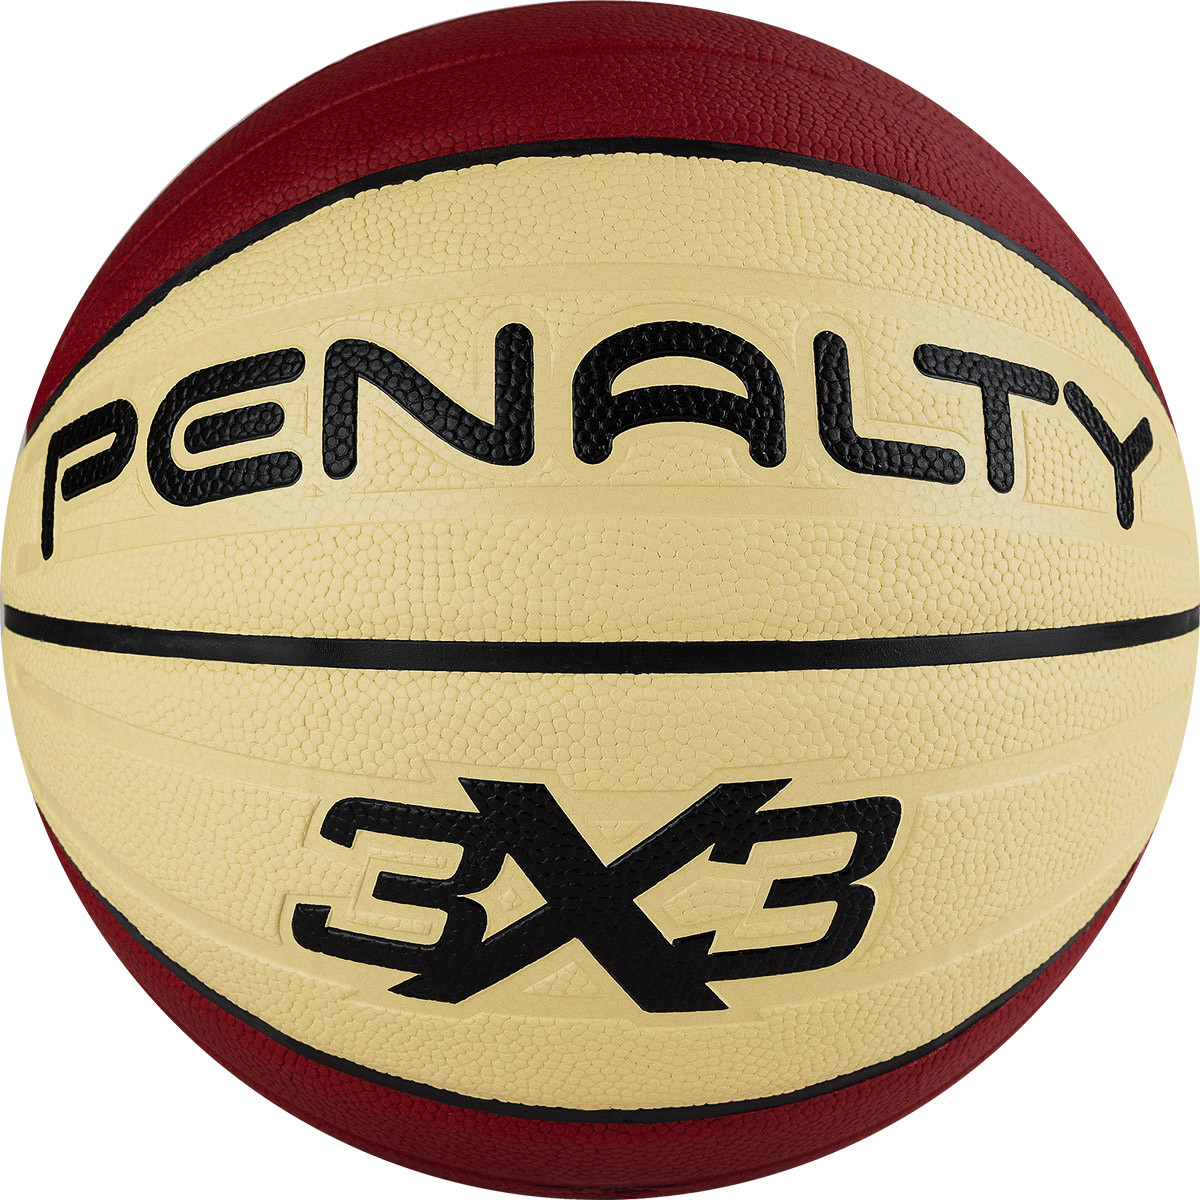 Мяч баскетбольный Penalty Bola Basquete 3X3 PRO IX ,5113134340-U, р.6, ПУ, бутил. камера, красно-беж. 1200_1200